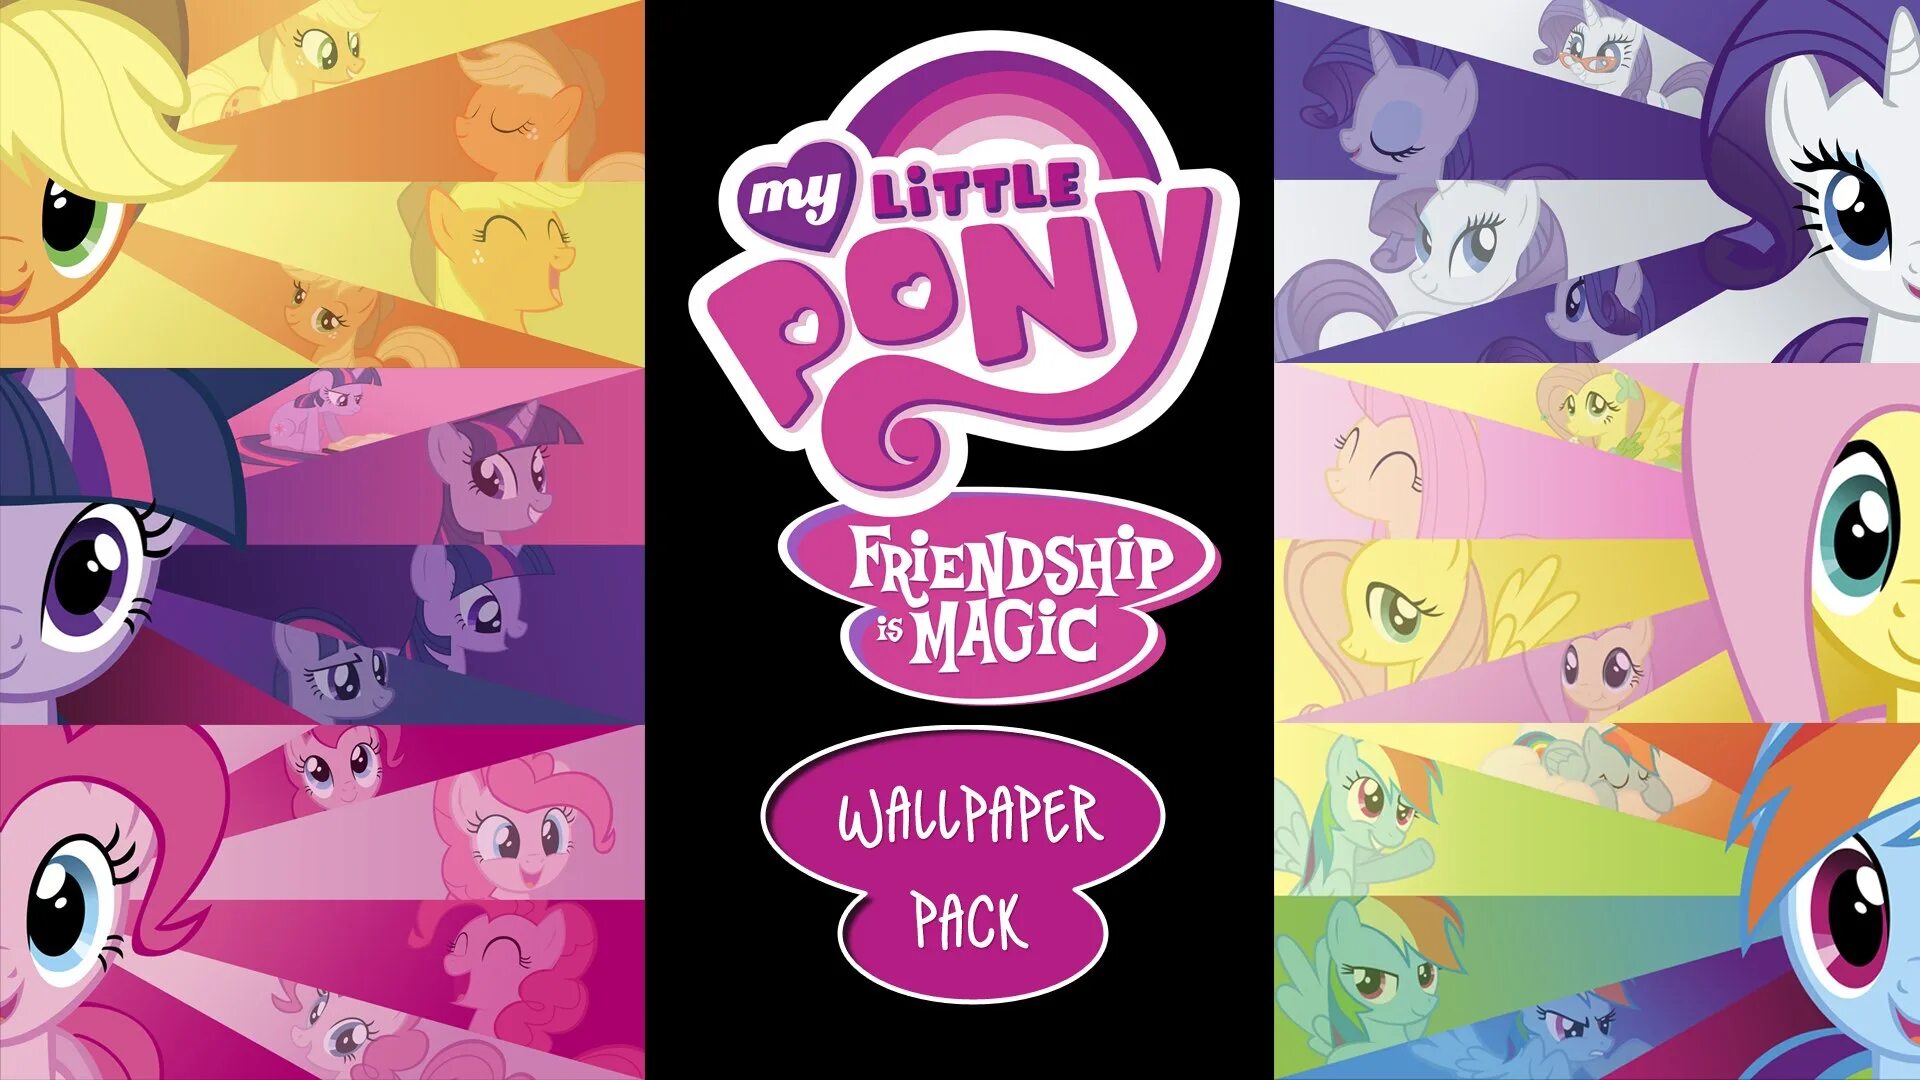 My little pony рецепты. My little Pony Дружба это чудо. My little Pony Friendship is Magic. Пони френдшип из Мэджик. My little Pony плакат.